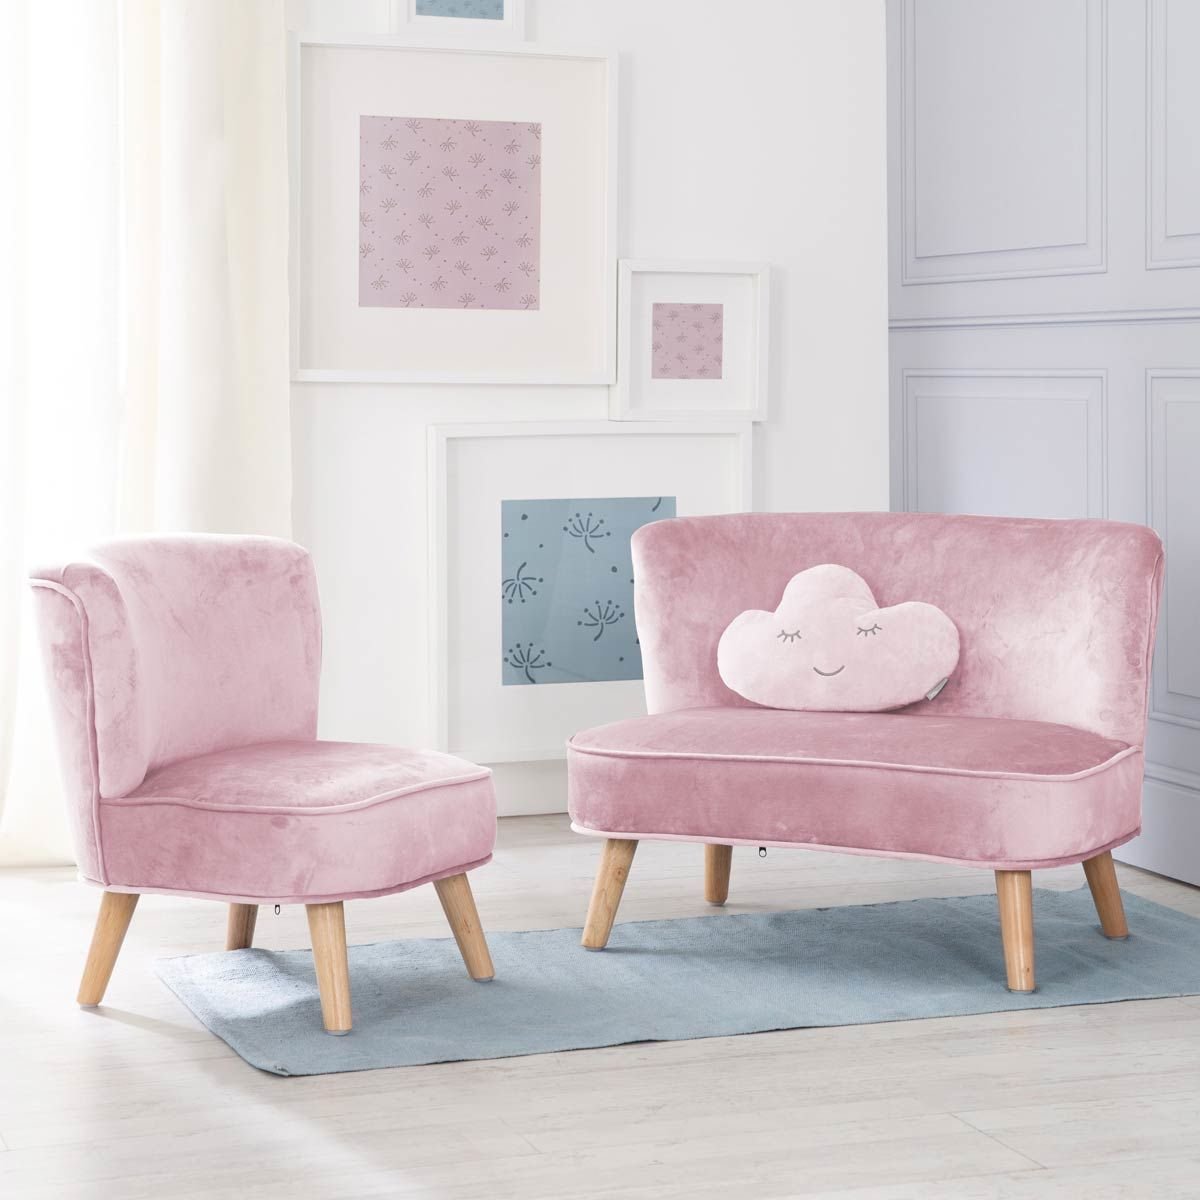 Roba Lil Sofa Set groß roba Style rosa/mauve